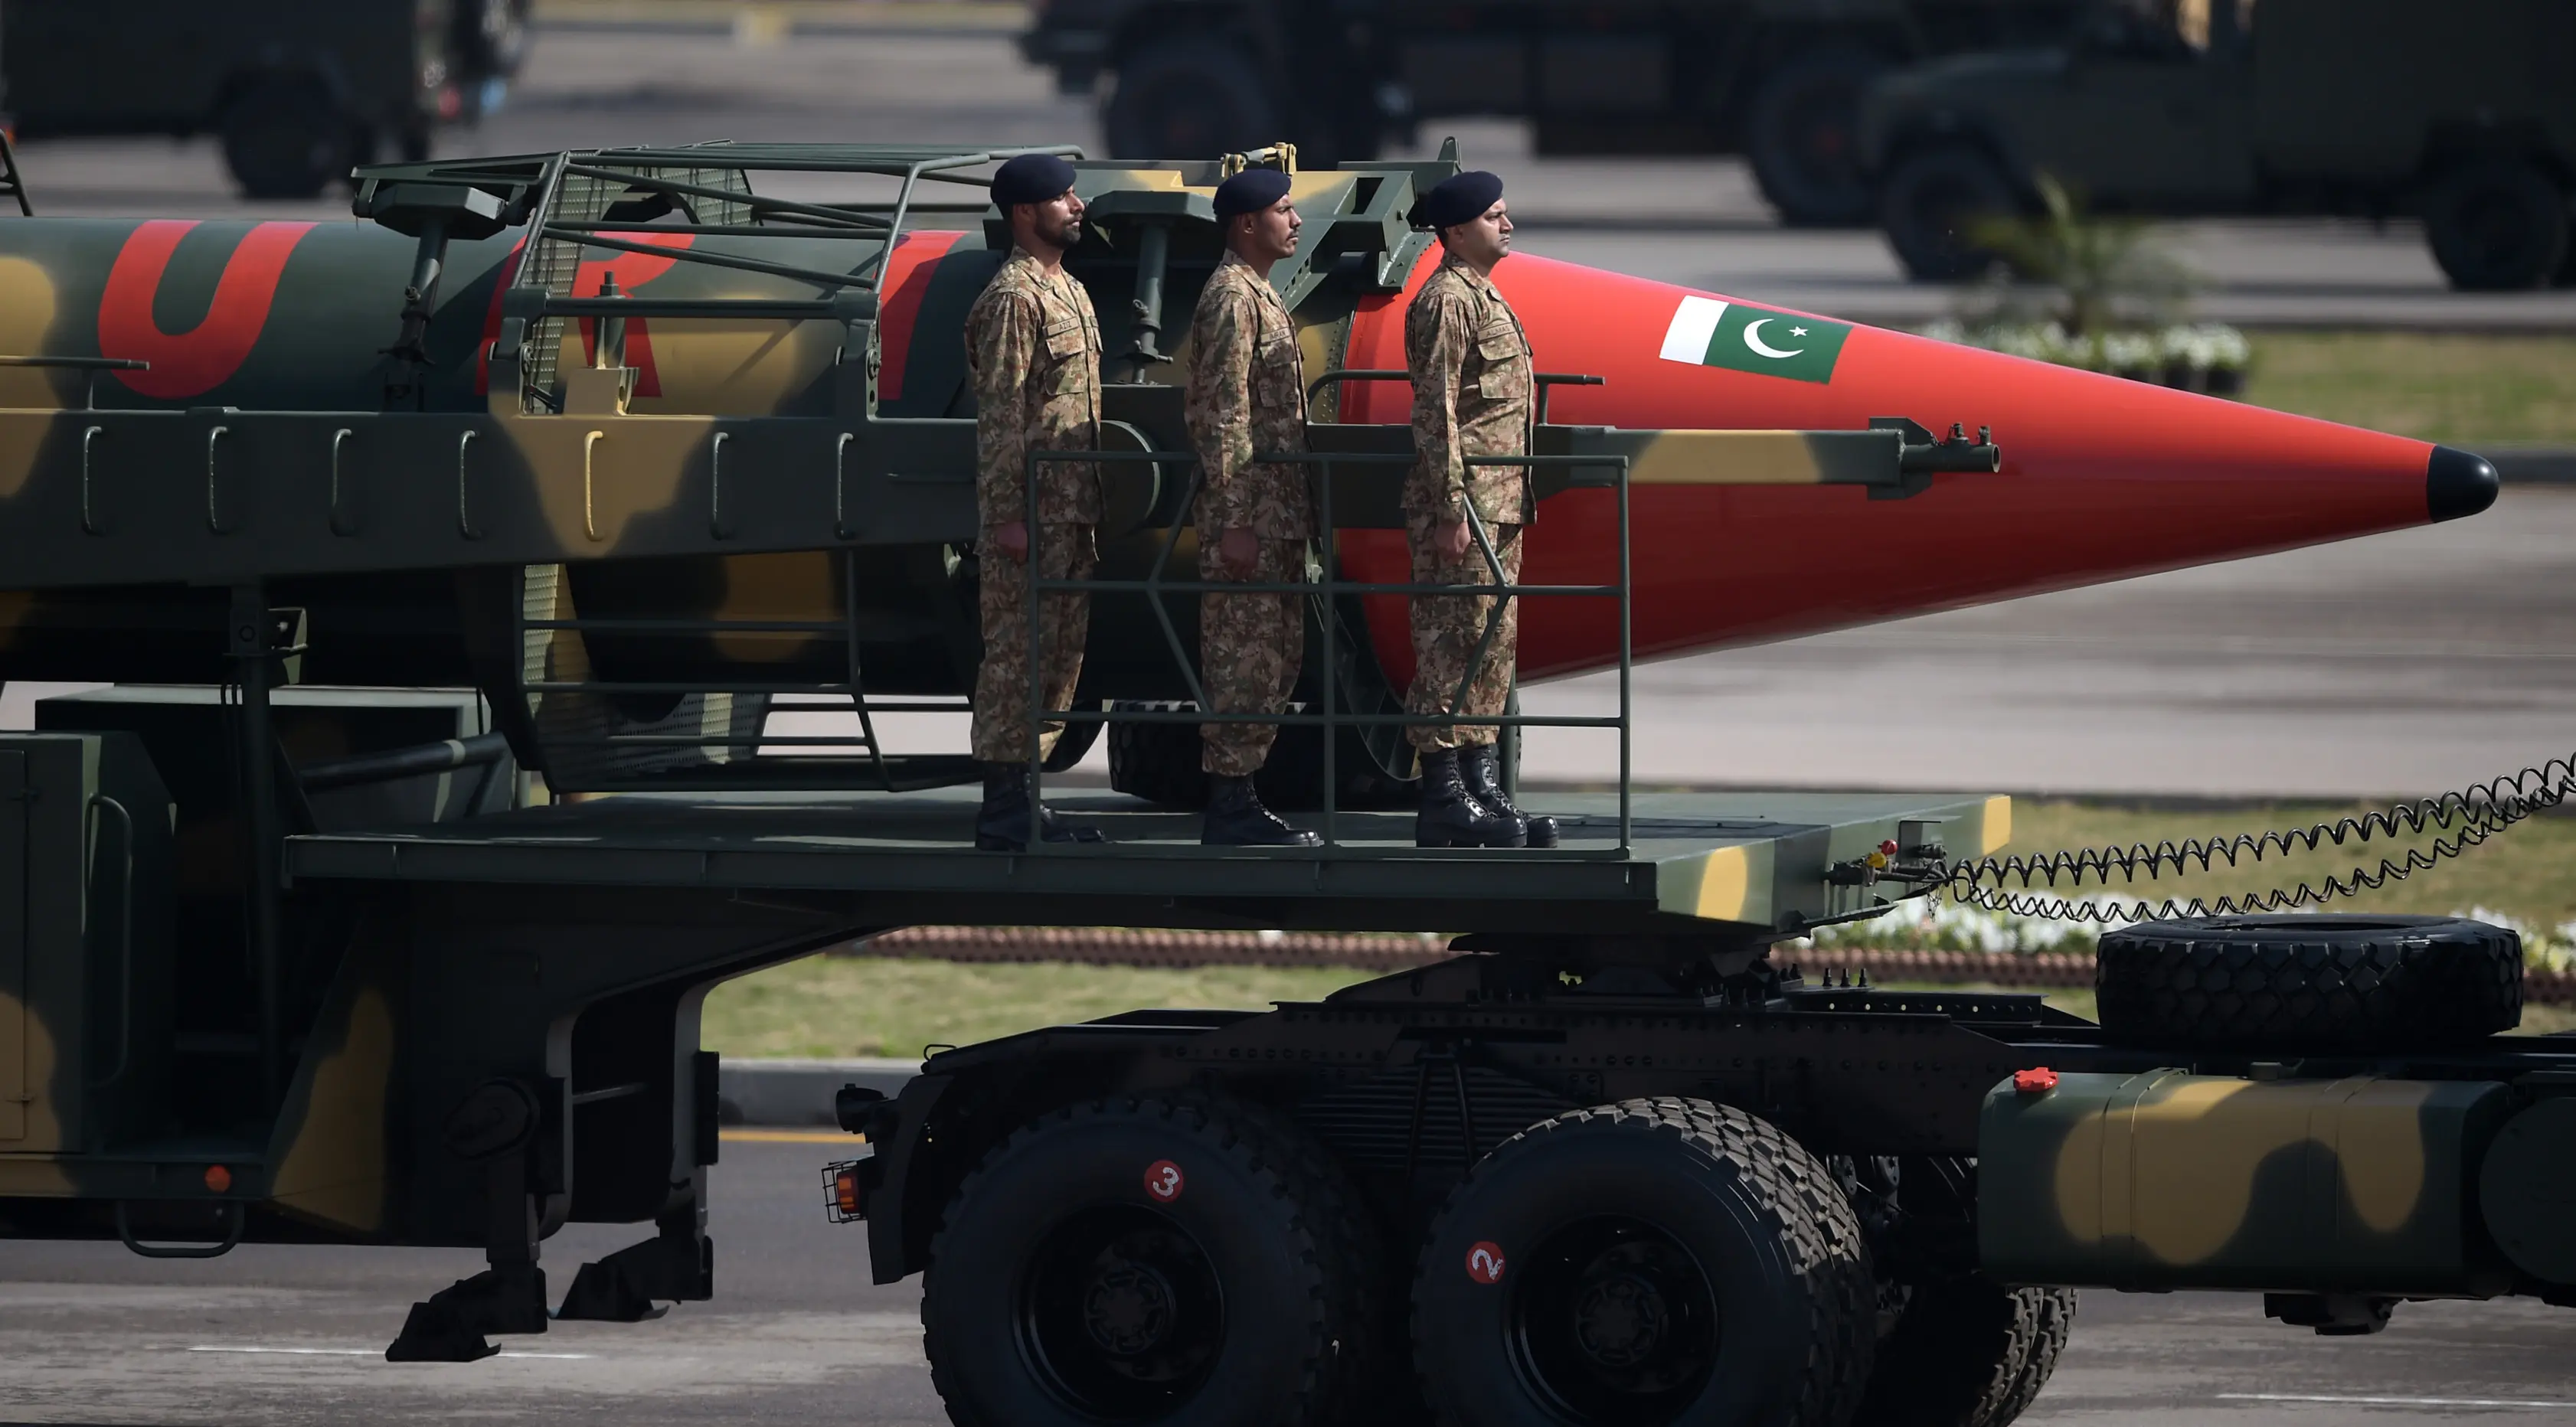 Rudal Ghauri berkemampuan daya ledak nuklir diperlihatkan saat parade Hari Militer Pakistan di Islamabad, (23/3). Parade ini menampilkan tank kelas berat, rudal balistik hingga rudal Ghauri berkemampuan daya ledak nuklir. (AFP Photo / Aamir Qureshi)